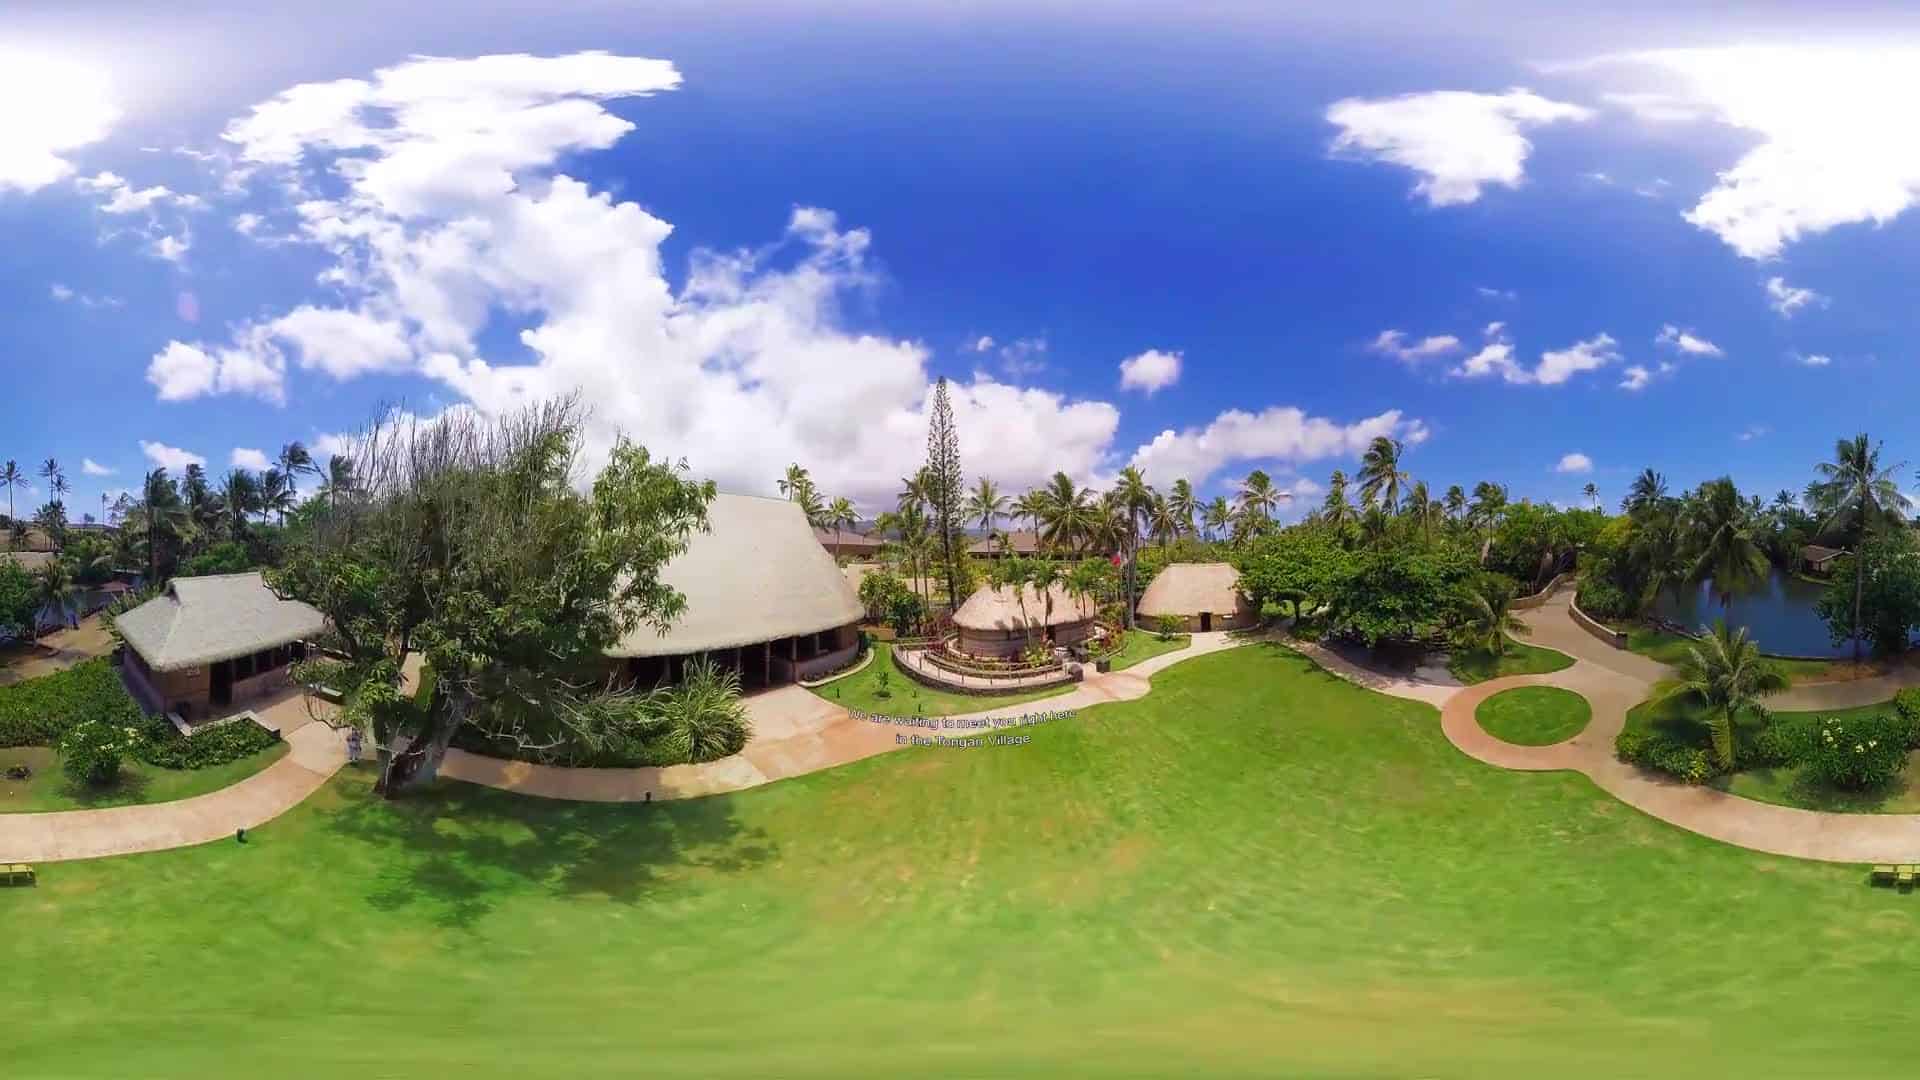 Polynesian Cultural Center Series in 360